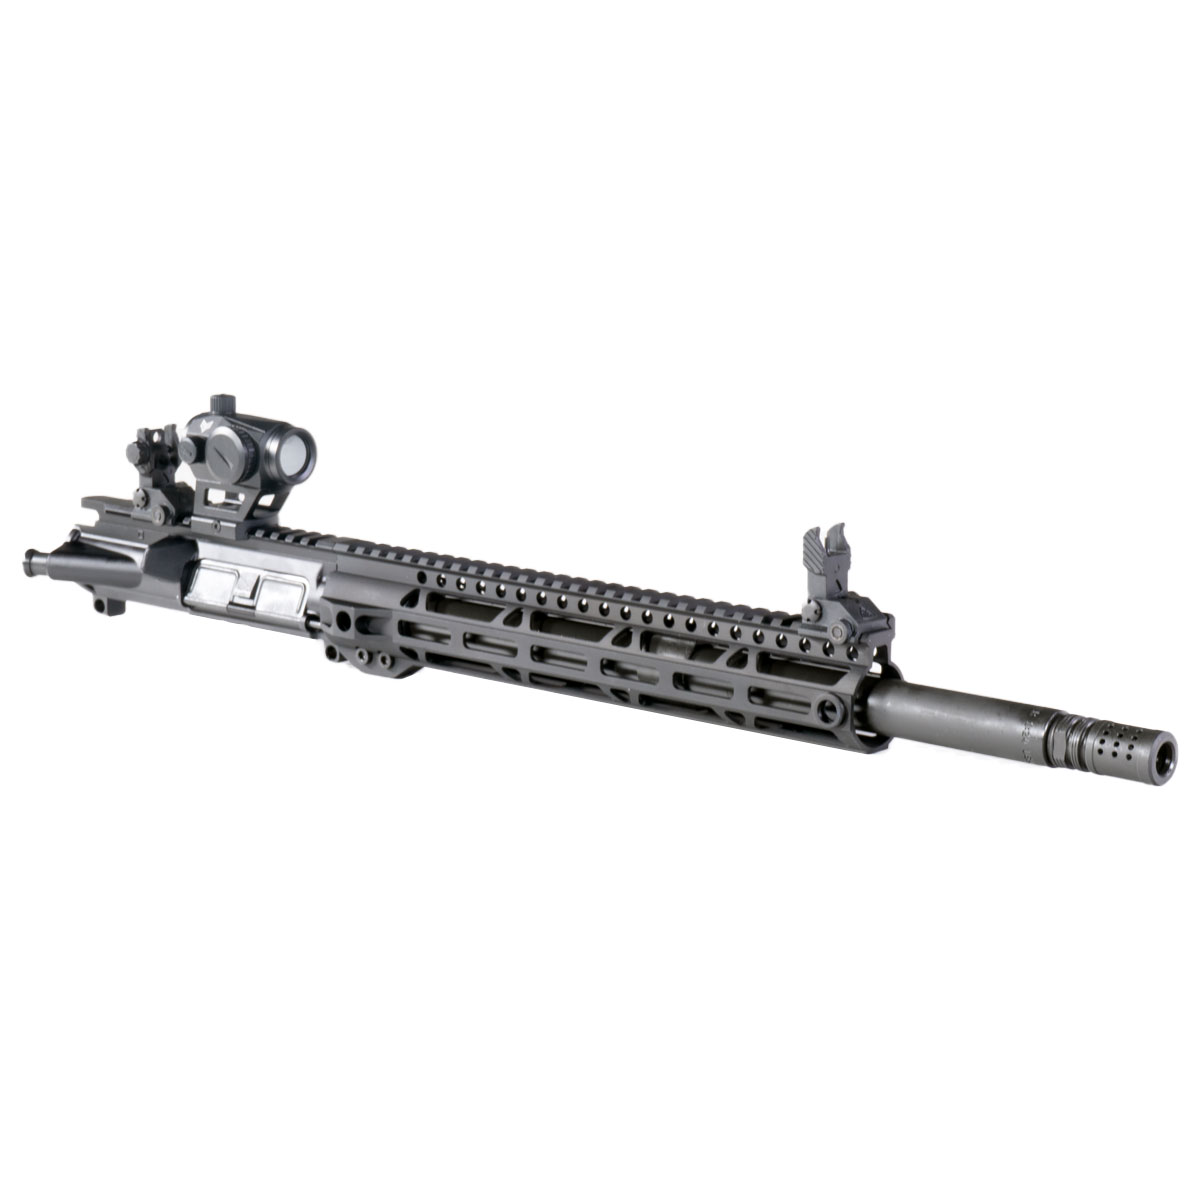 DTT 'Thumper' 16-inch AR-15 .450 Bushmaster Manganese Phosphate Rifle Upper Build Kit